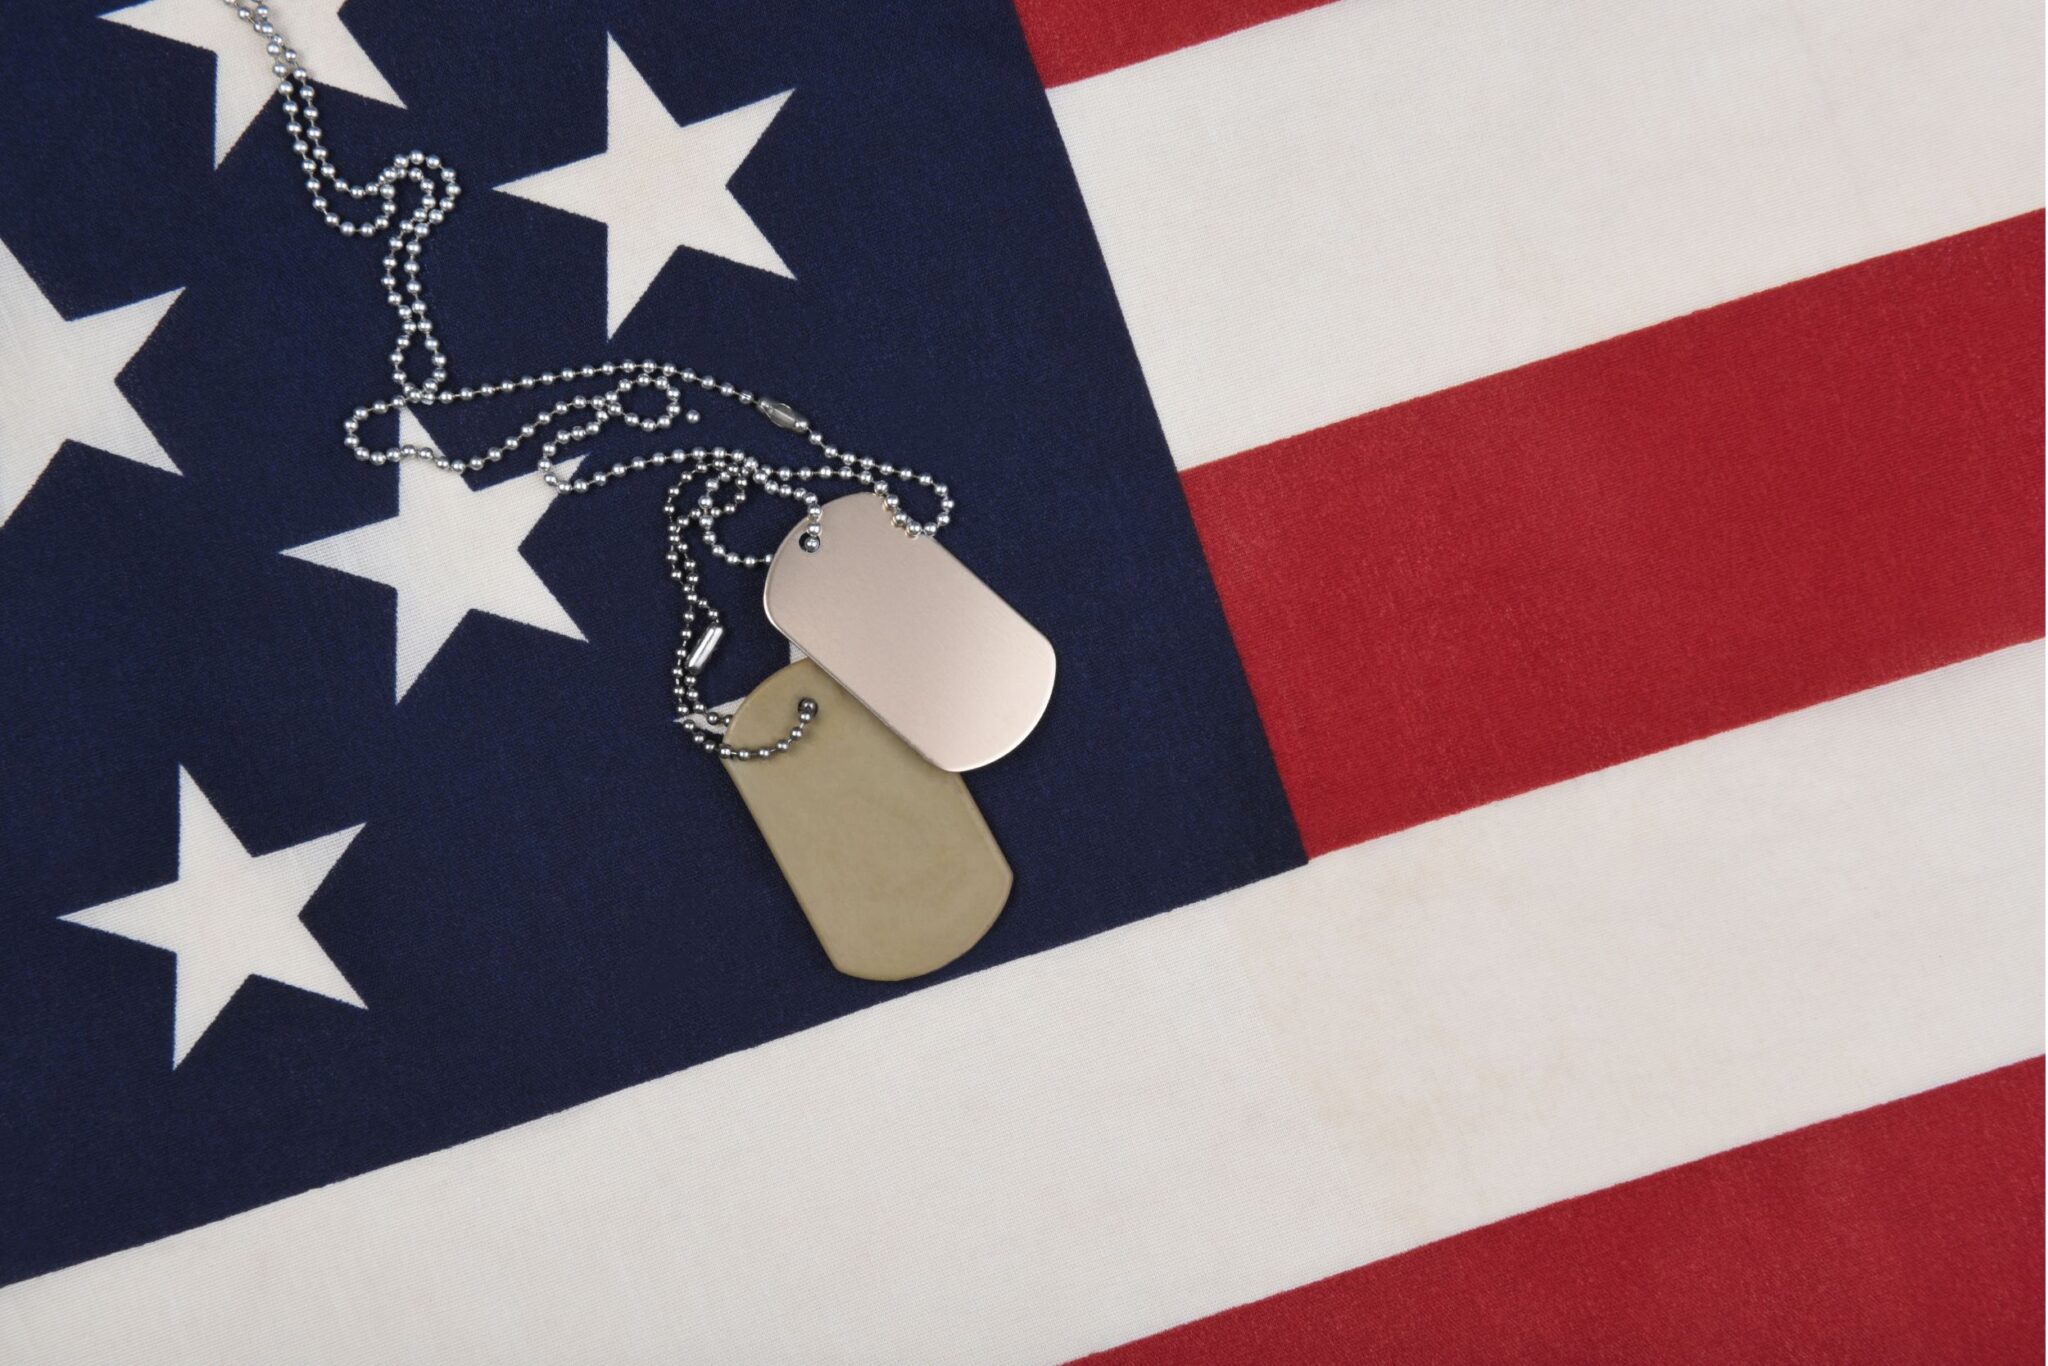 Military dog tags on an American flag